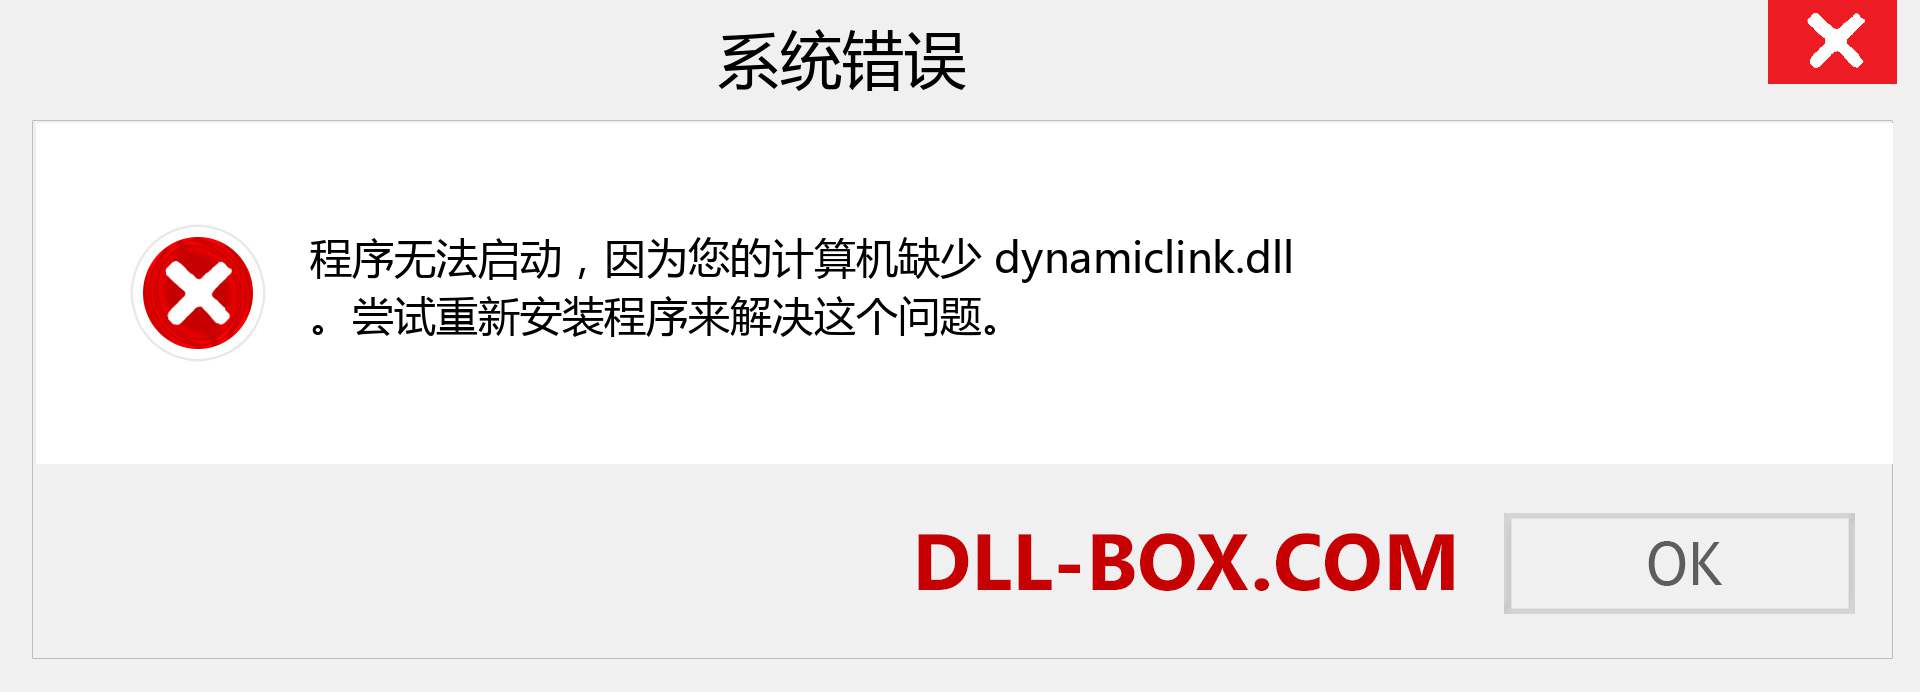 dynamiclink.dll 文件丢失？。 适用于 Windows 7、8、10 的下载 - 修复 Windows、照片、图像上的 dynamiclink dll 丢失错误